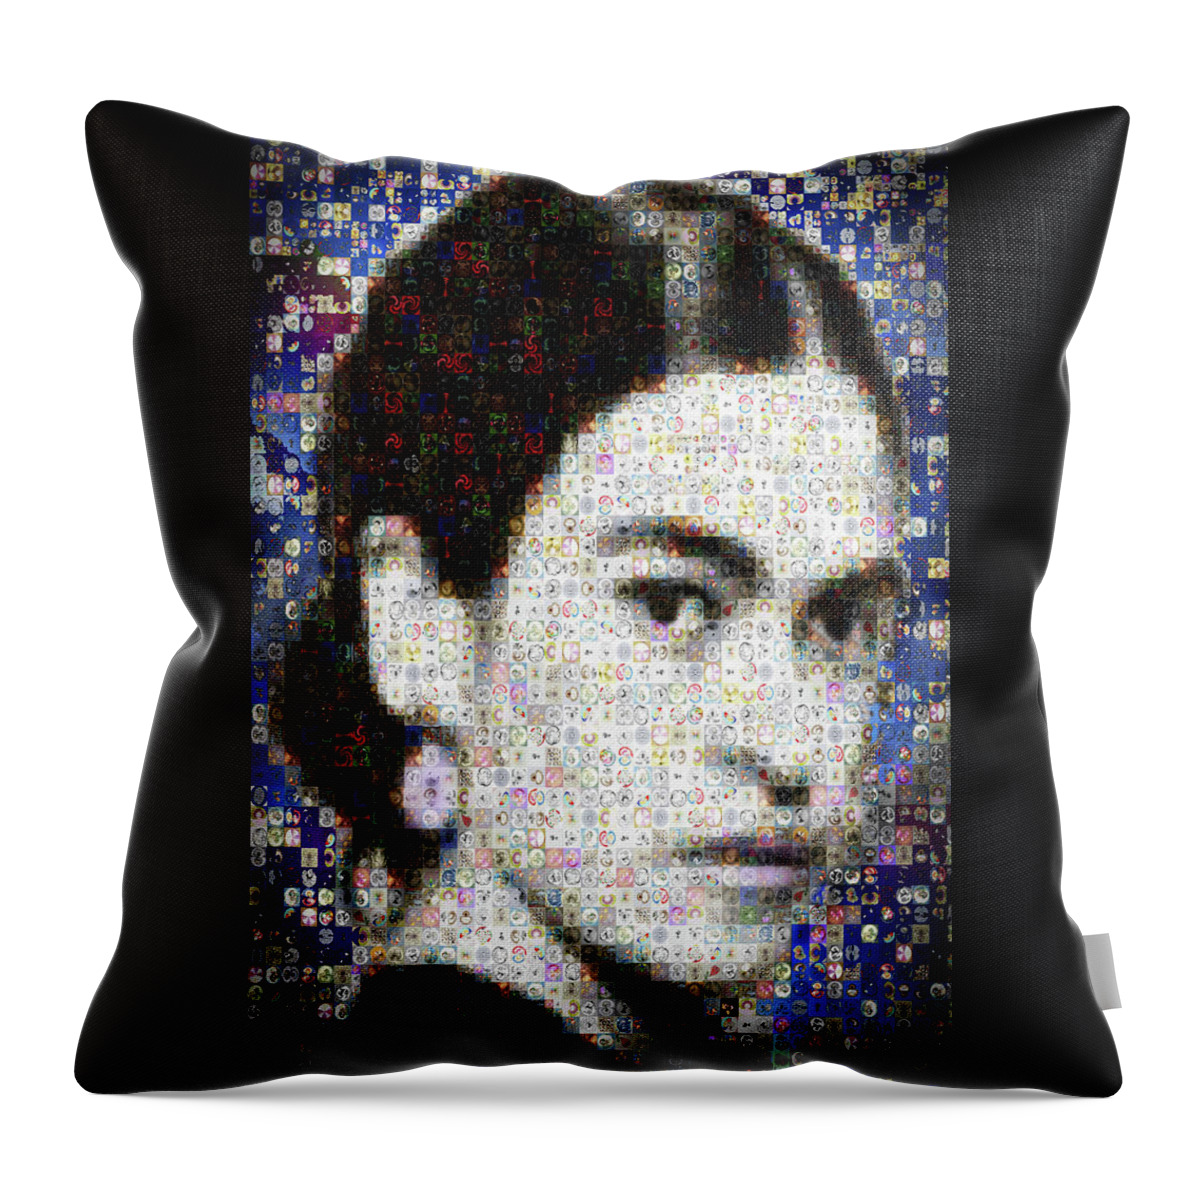 Mosaic Throw Pillow featuring the photograph Frida Kahlo Mosaic by Paula Ayers